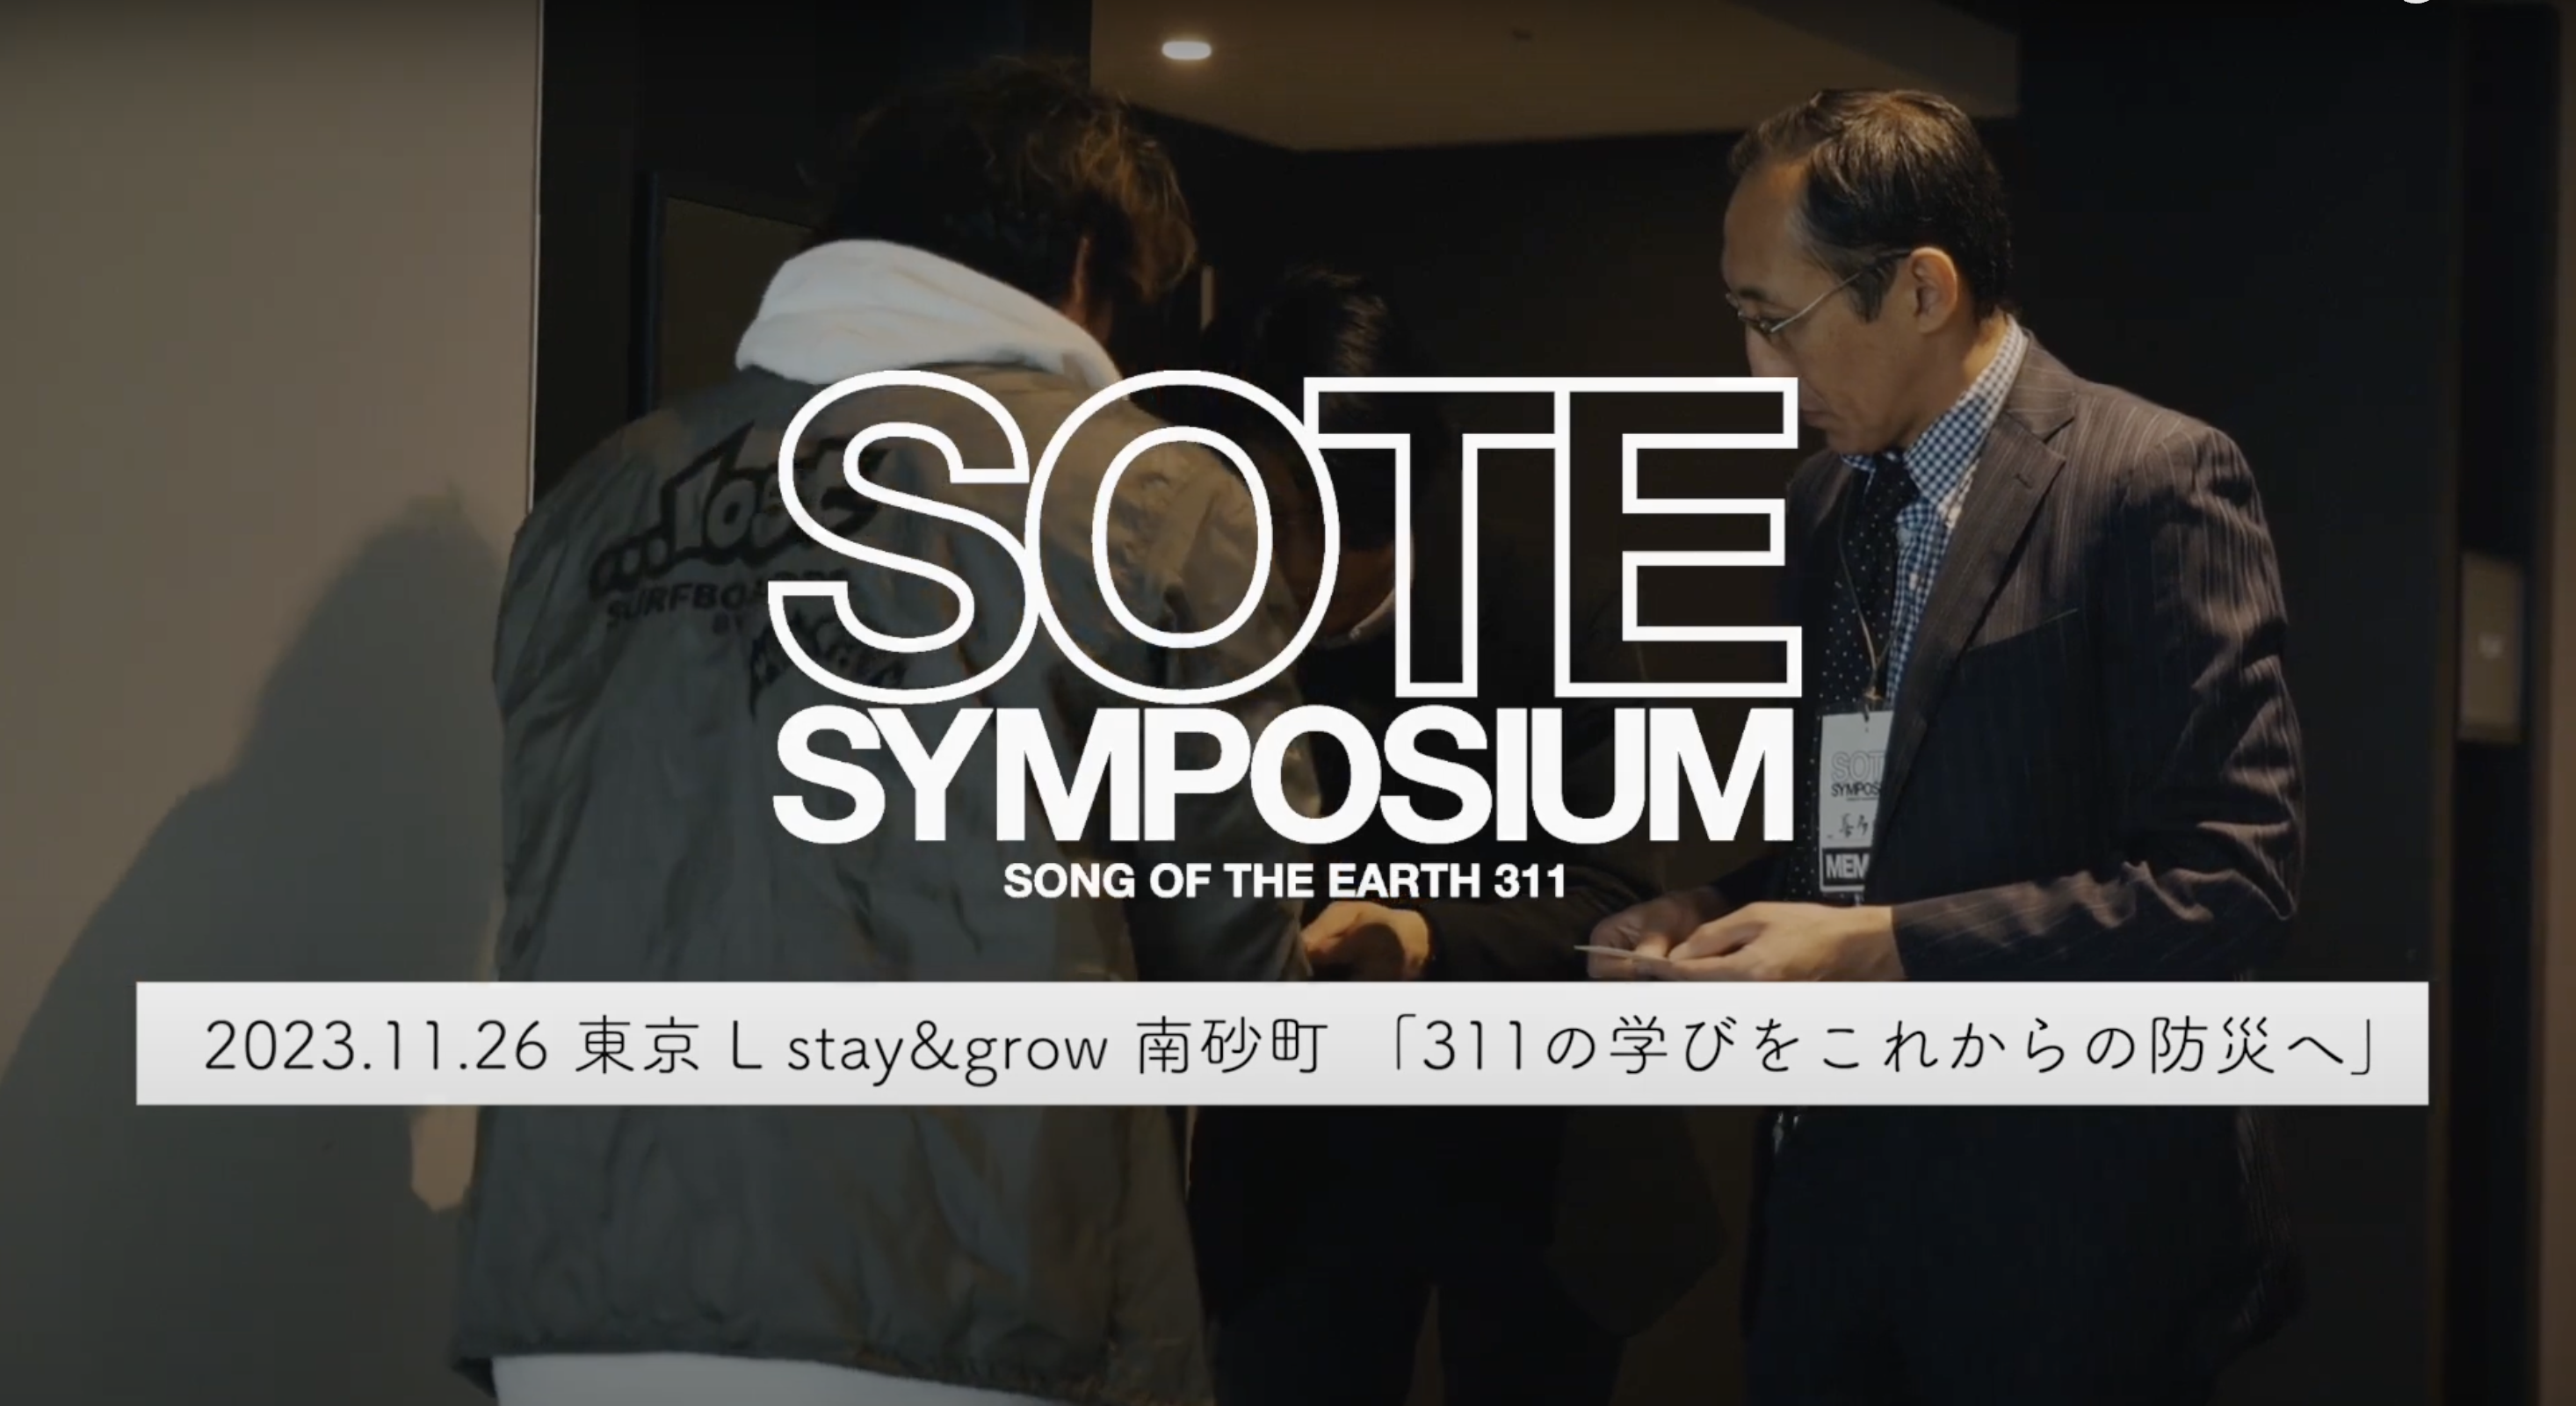 「SOTE SYMPOSIUM 東京会場」の様子がYouTubeにアップされました！